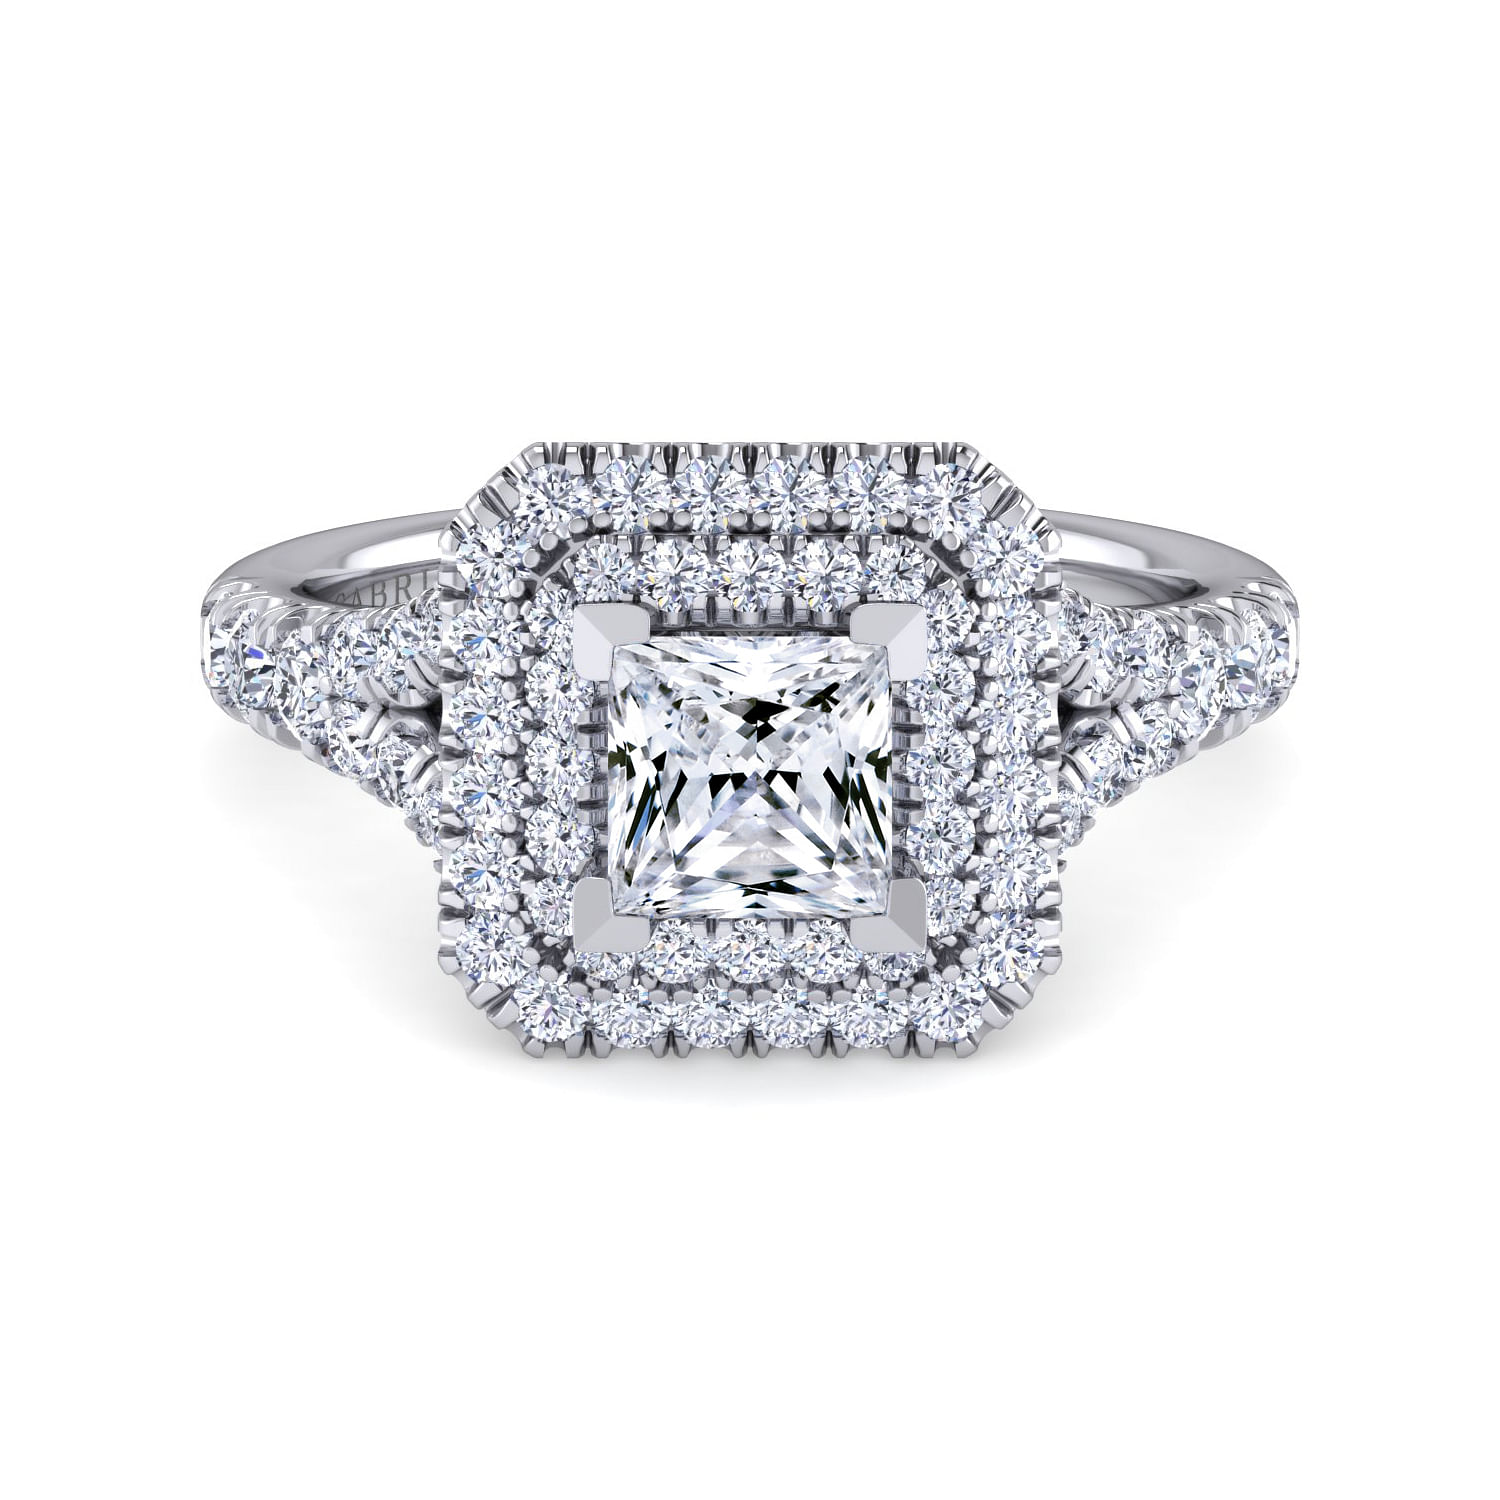 Lexie - 14K White Gold Princess Cut Double Halo Diamond Engagement Ring